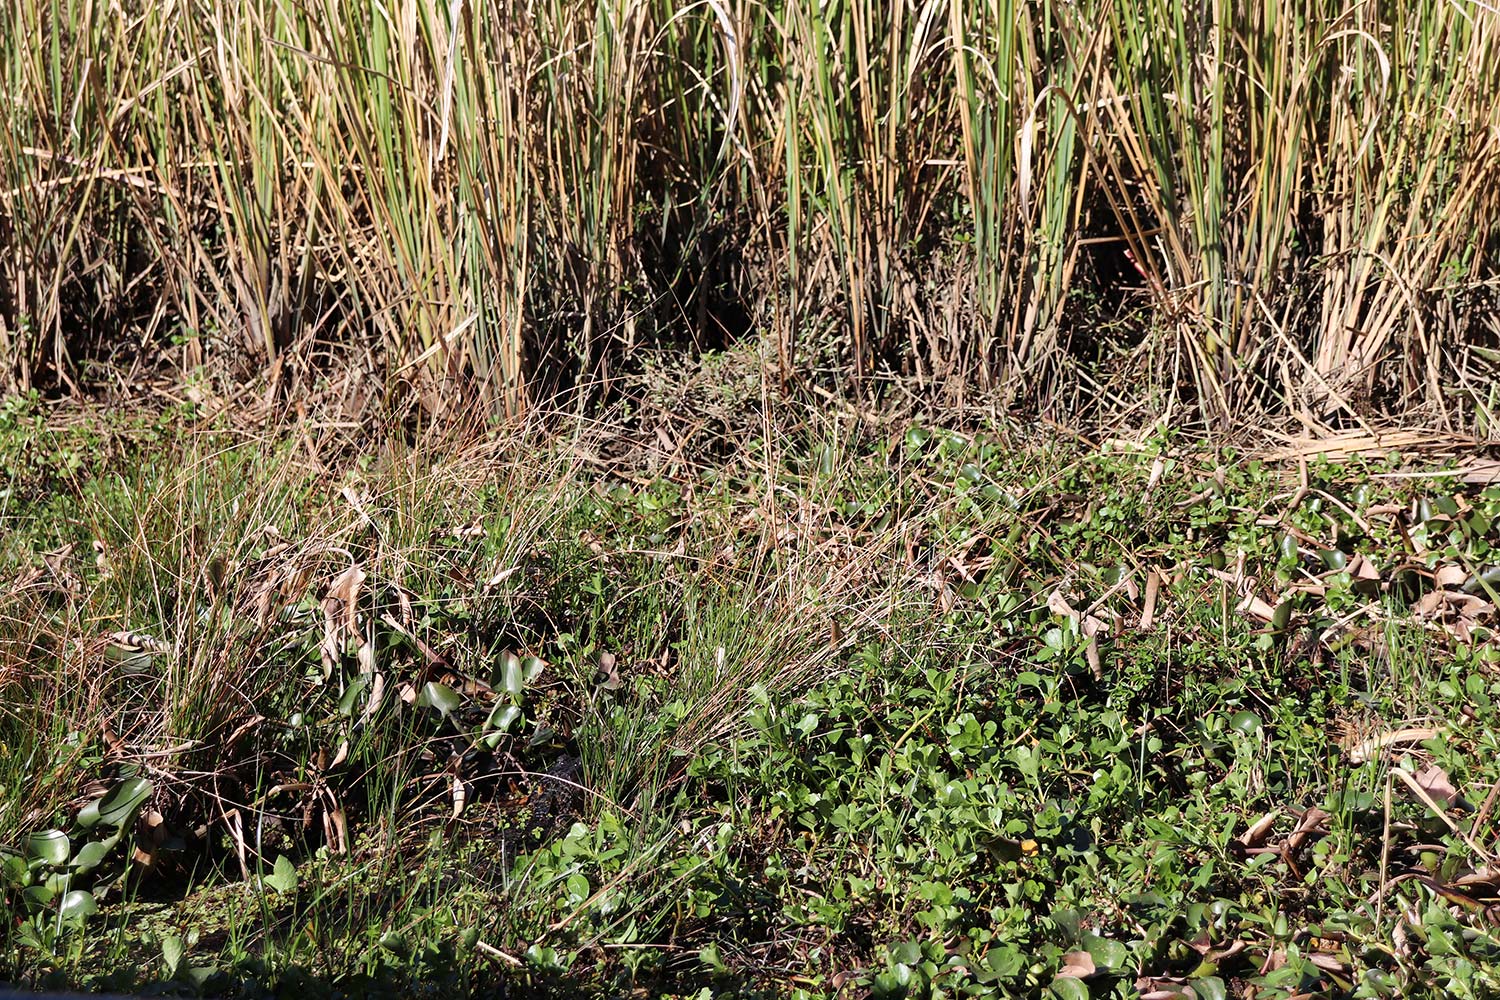 Alligators in the Louisiana Swamp